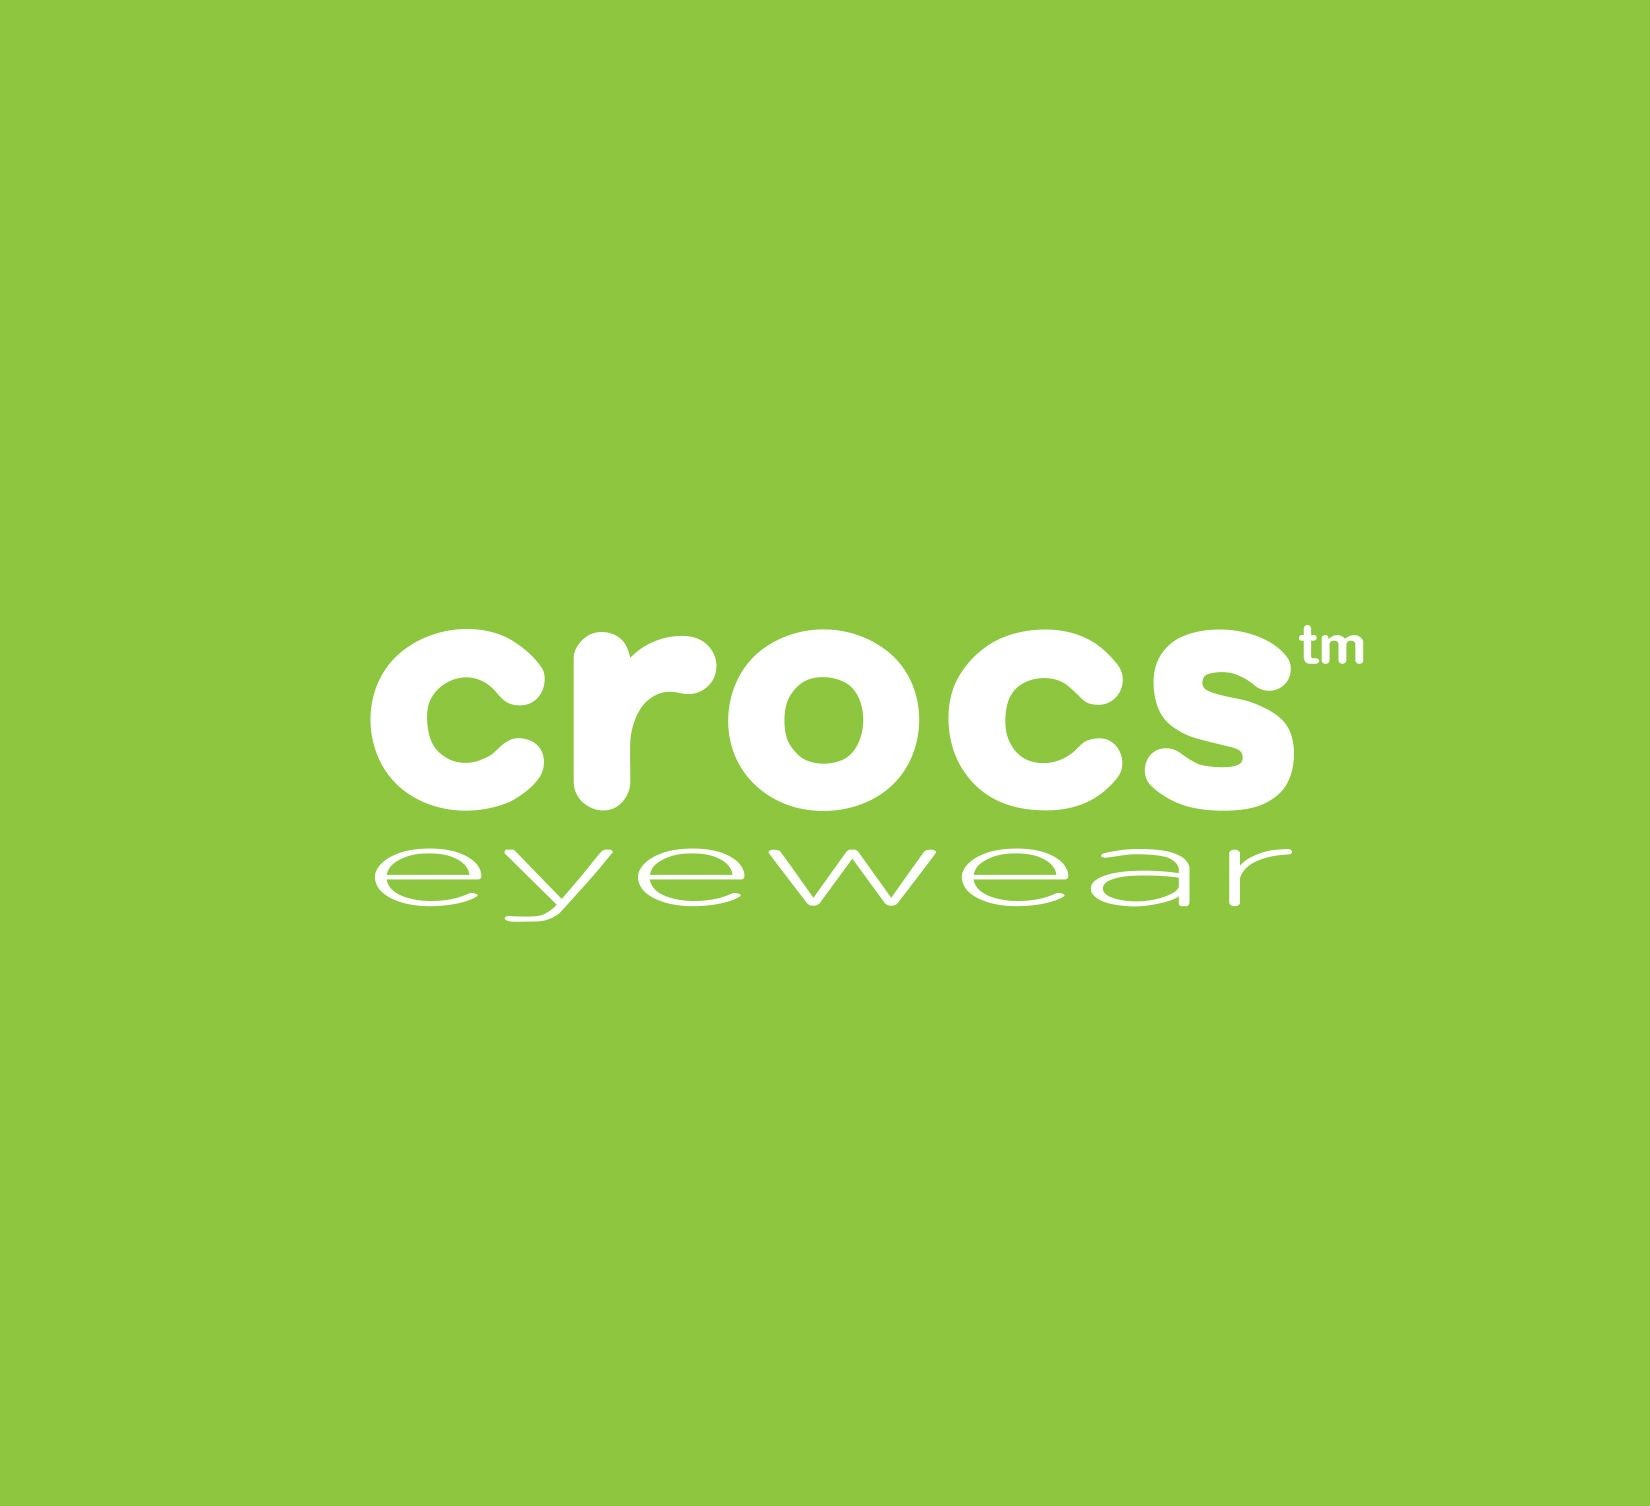 Crocs eyewear